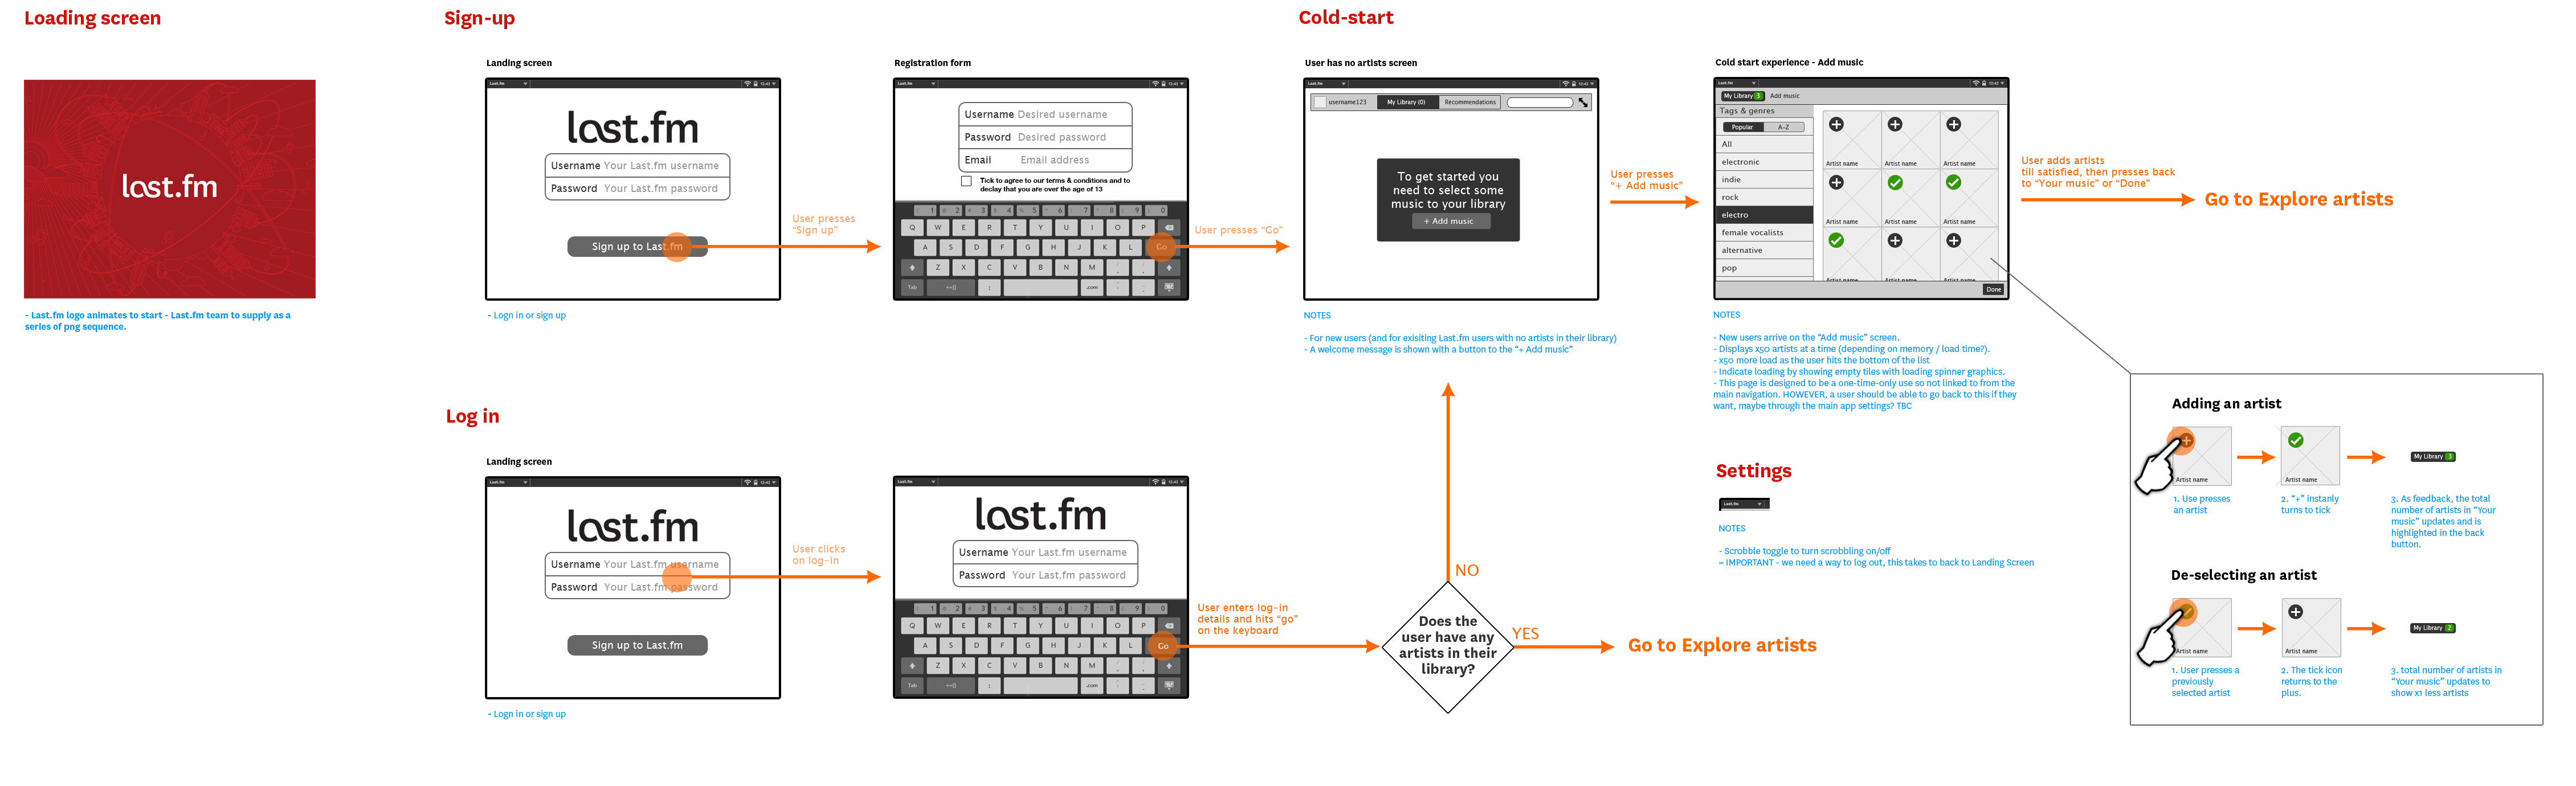 Last.fm tablet music discovery app concept sketches  freelance ux designer